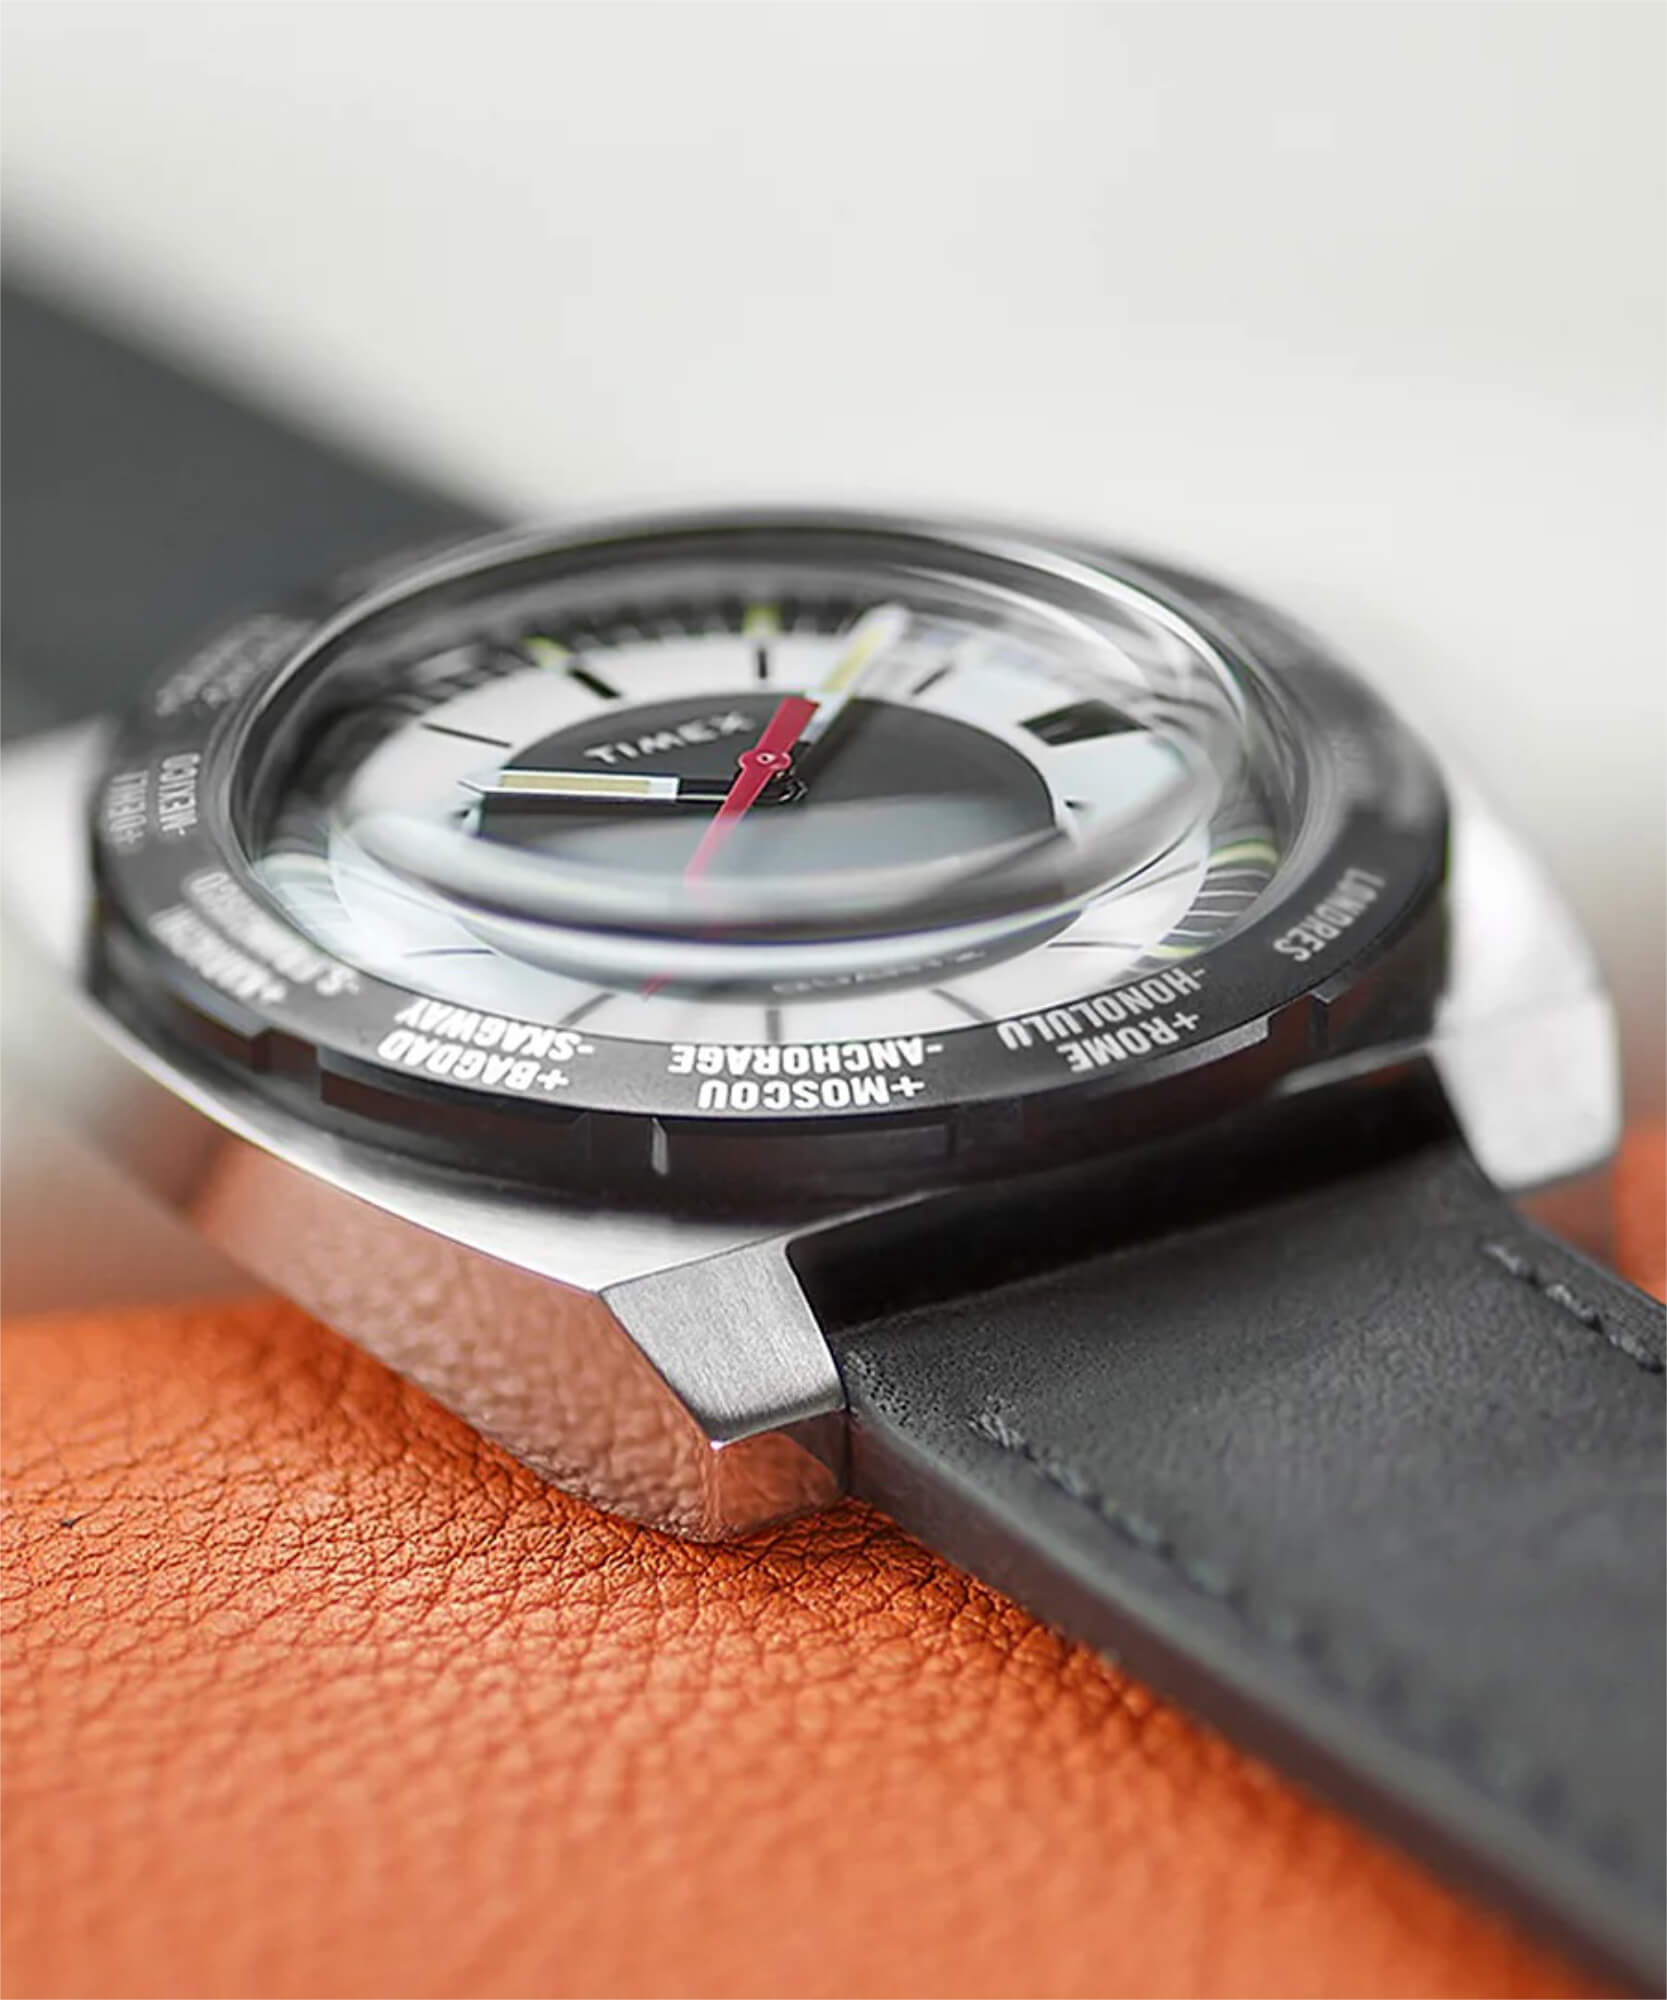 НОВИНКА: Часы Nifty Timex World Time 1972 года